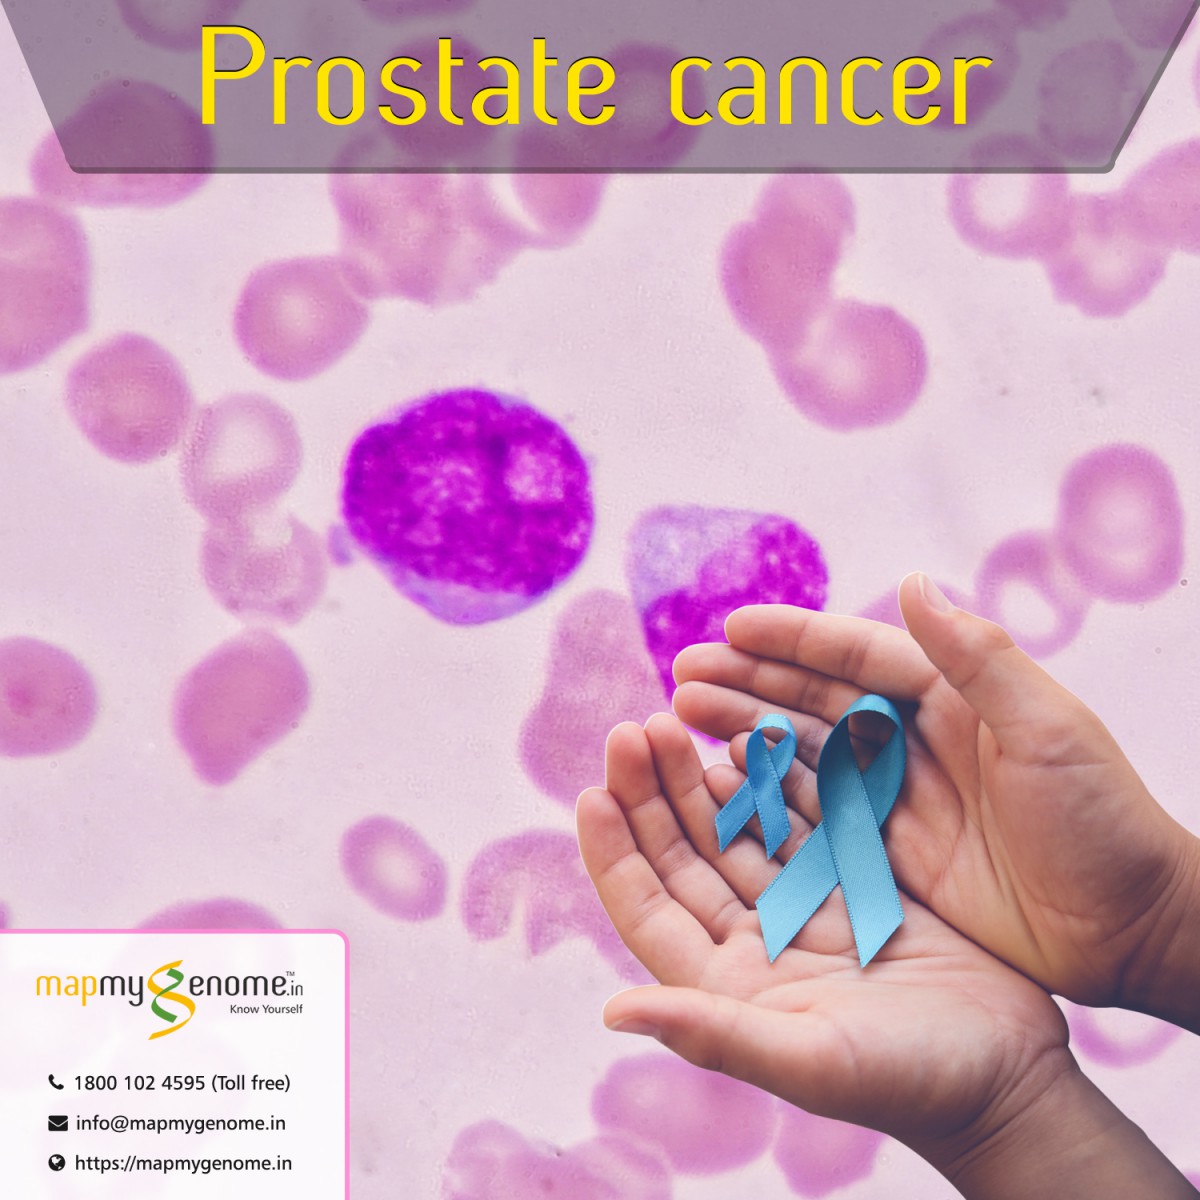 Prostate cancer awareness